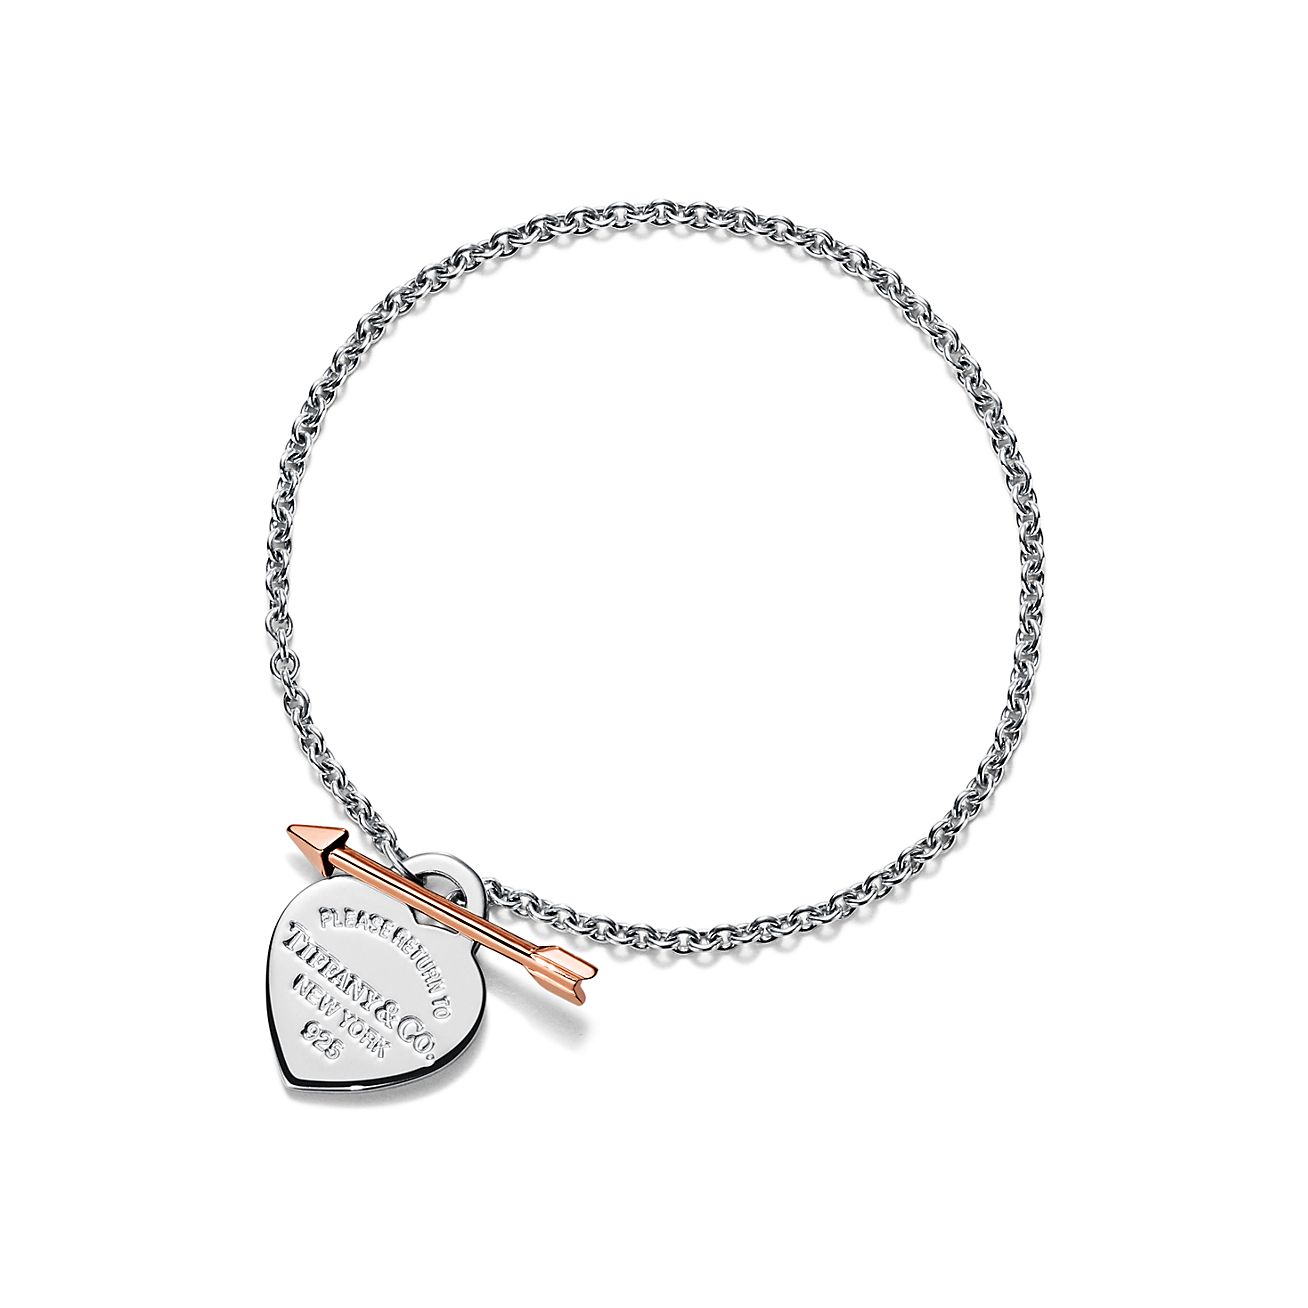 Return to Tiffany® Silver Heart Tag Bracelet